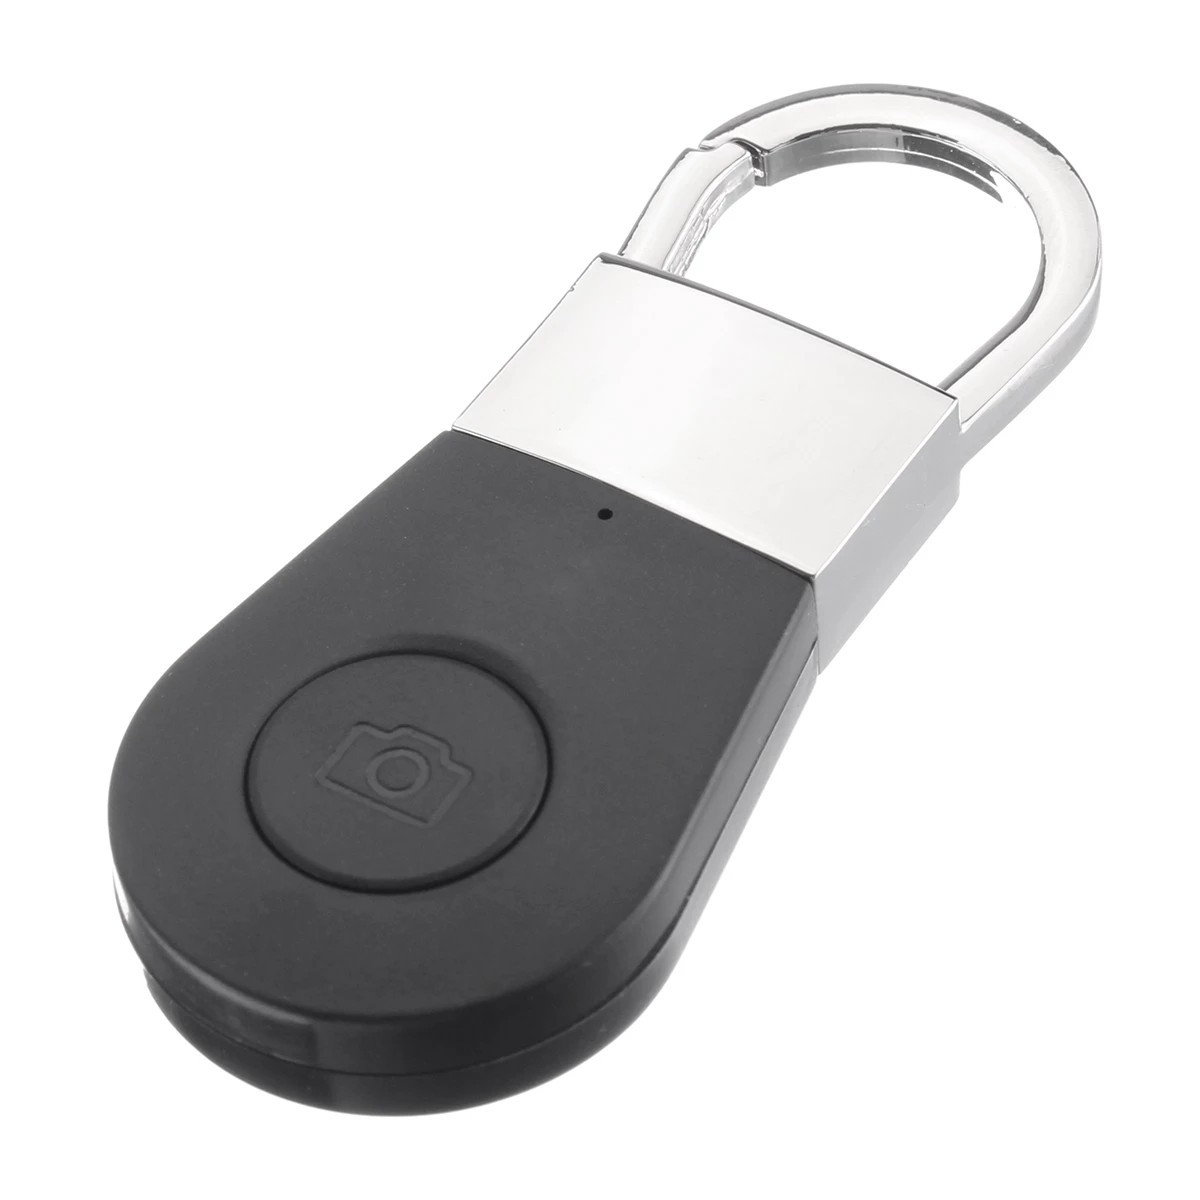 Key finder - bluetooth iskalnik ključev, mobilnega telefona itd